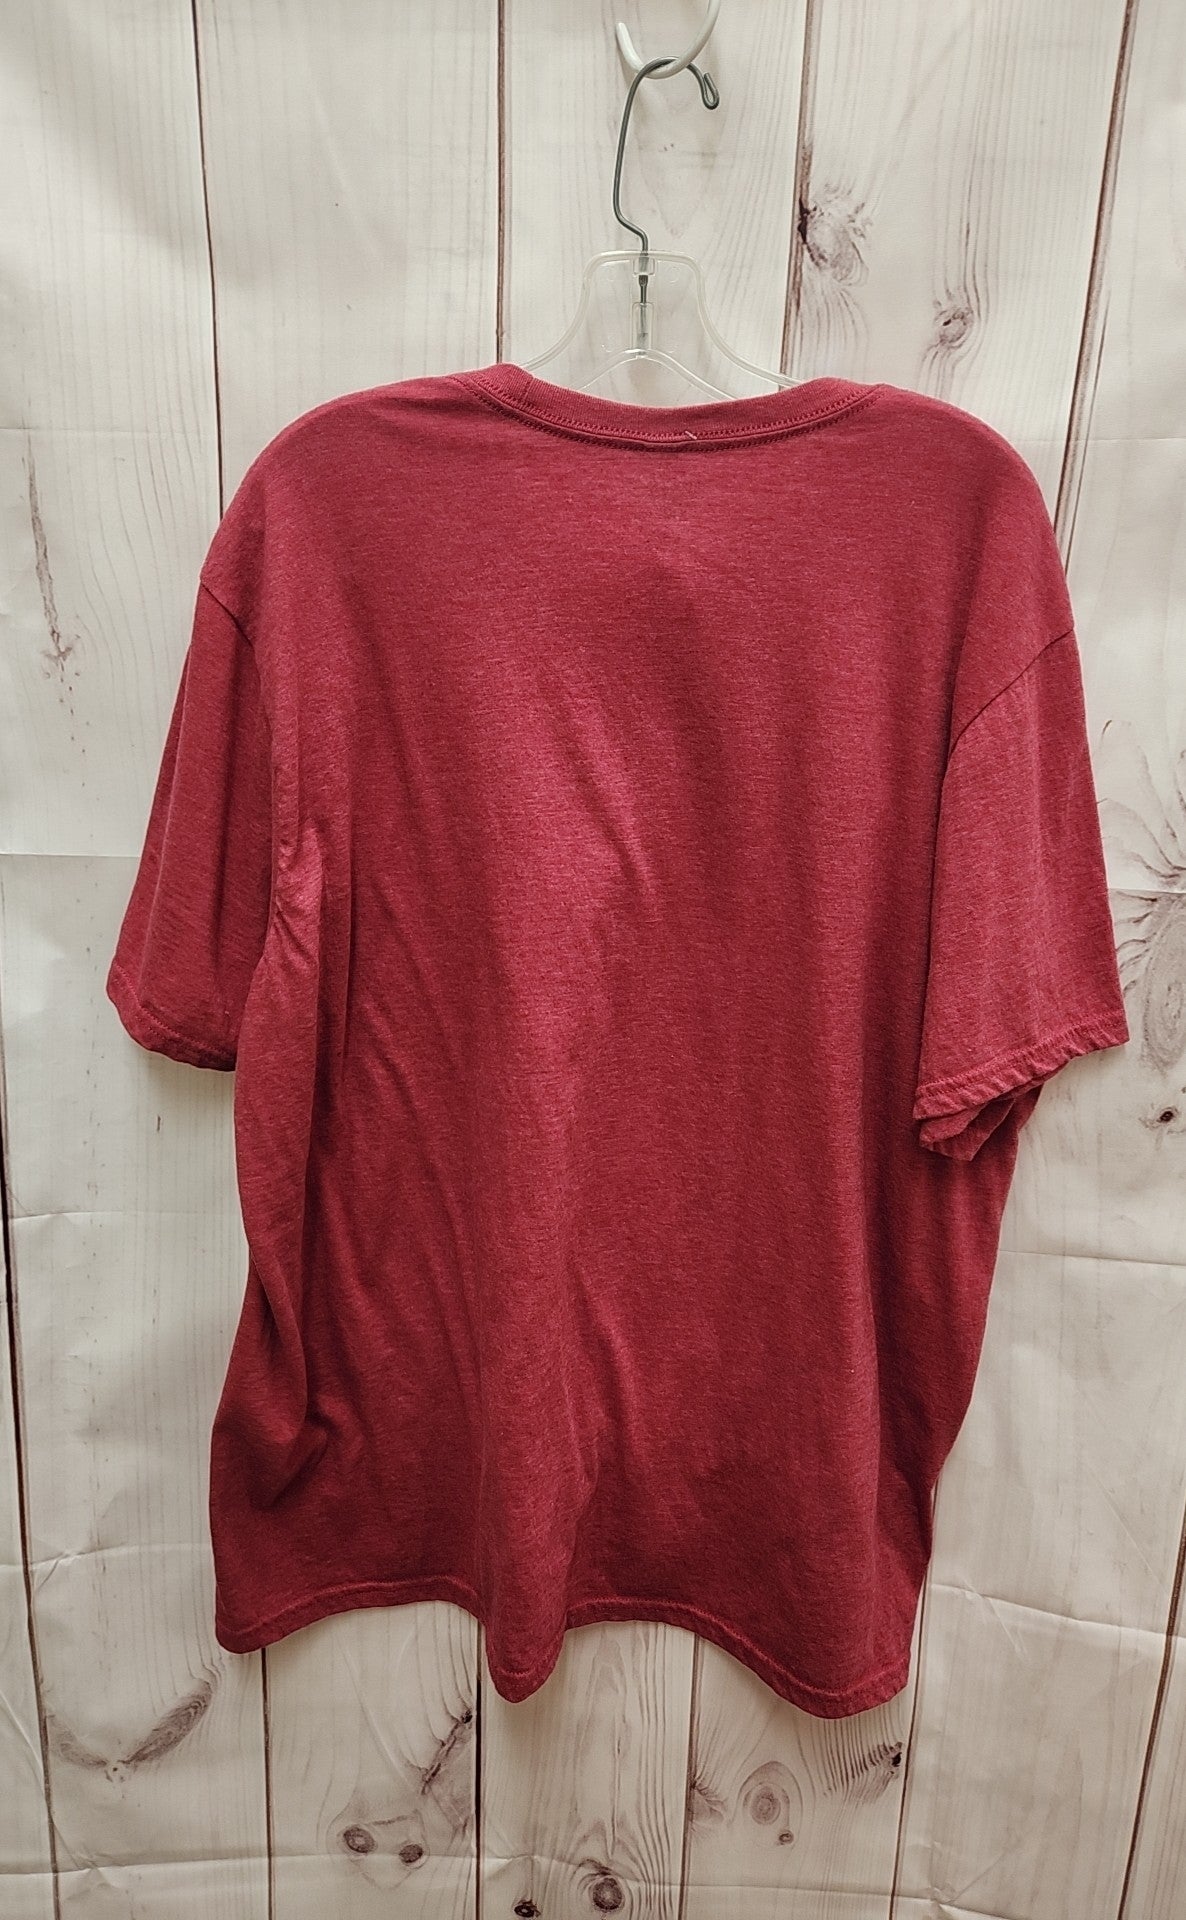 Reebok Men's Size XXL Red Shirt